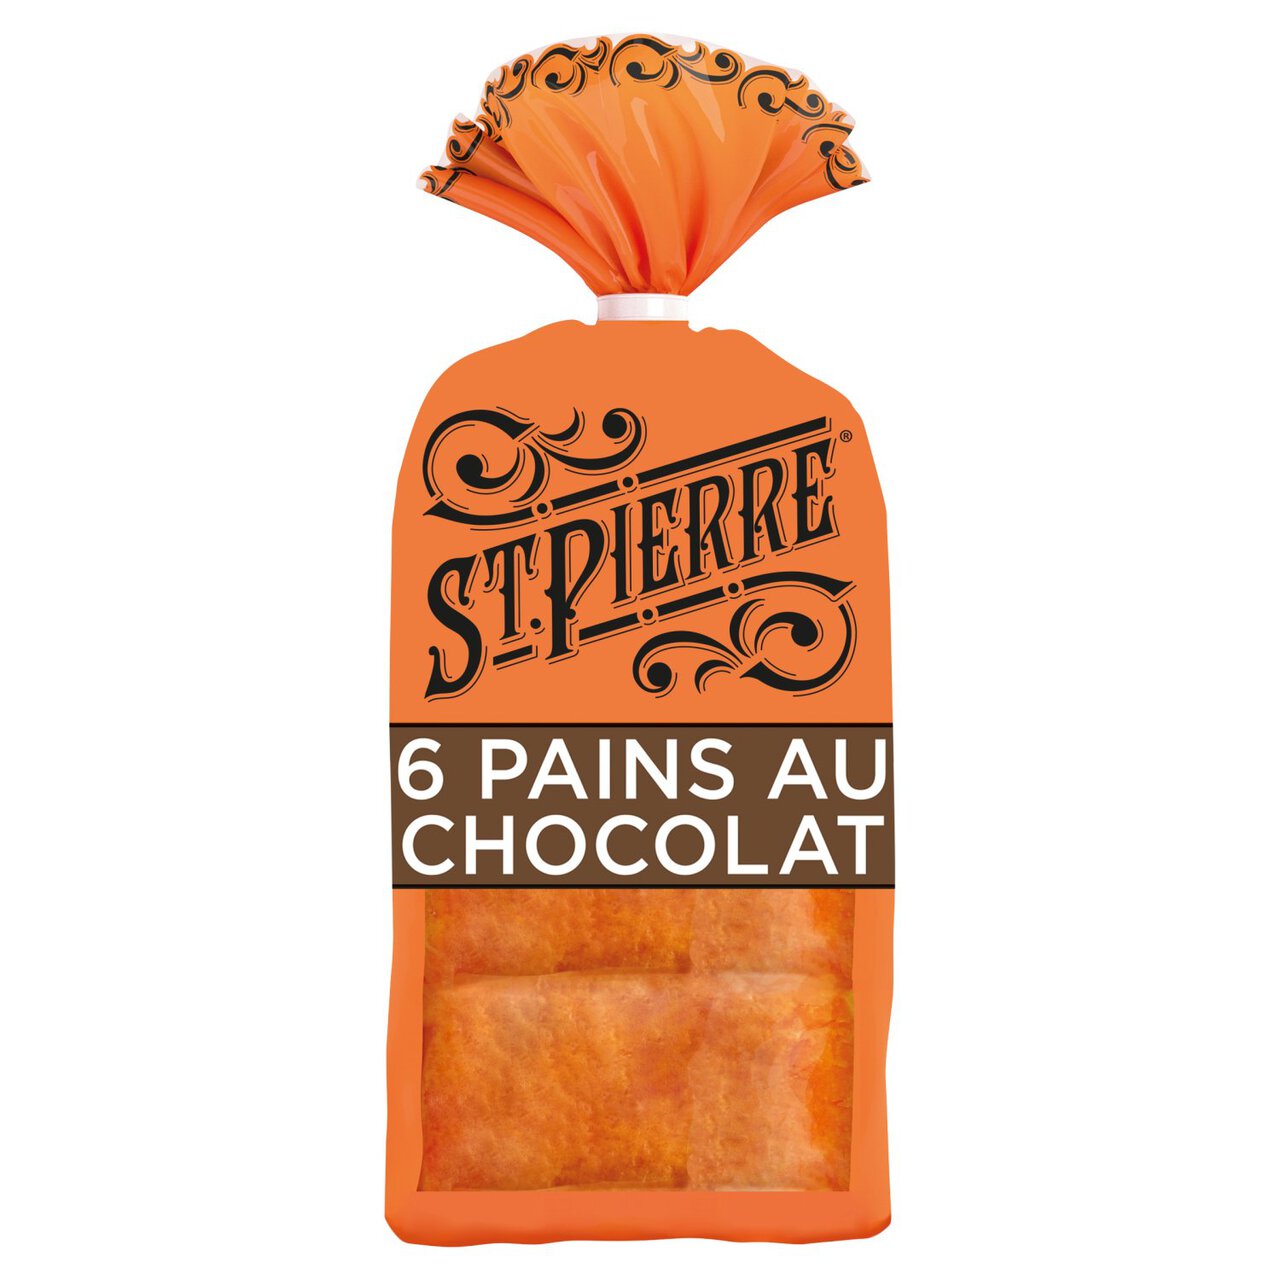 St Pierre Pain Au Choc 6 per pack